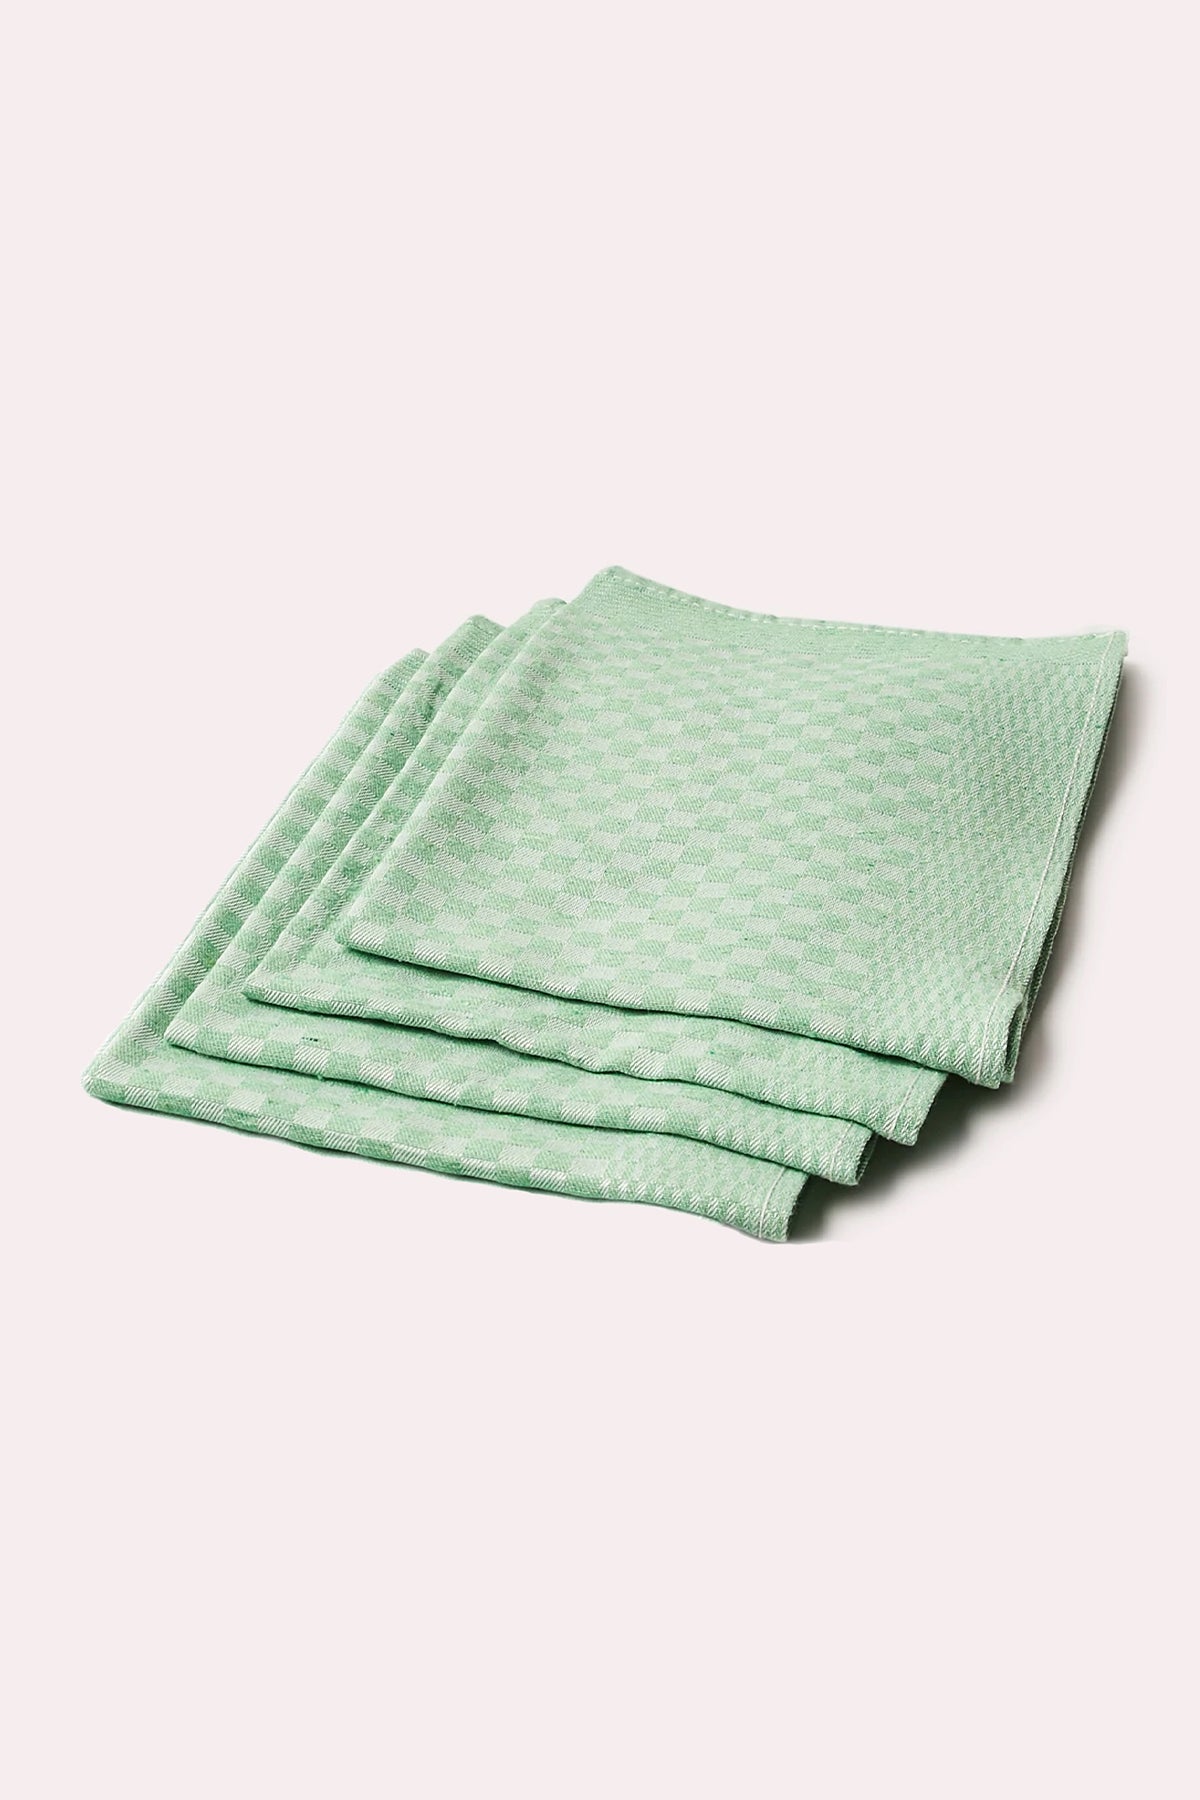 tea towel, table napkin, napkins, kitchen towel, dish towel, cloth napkins, kitchen linens, kithchen textile